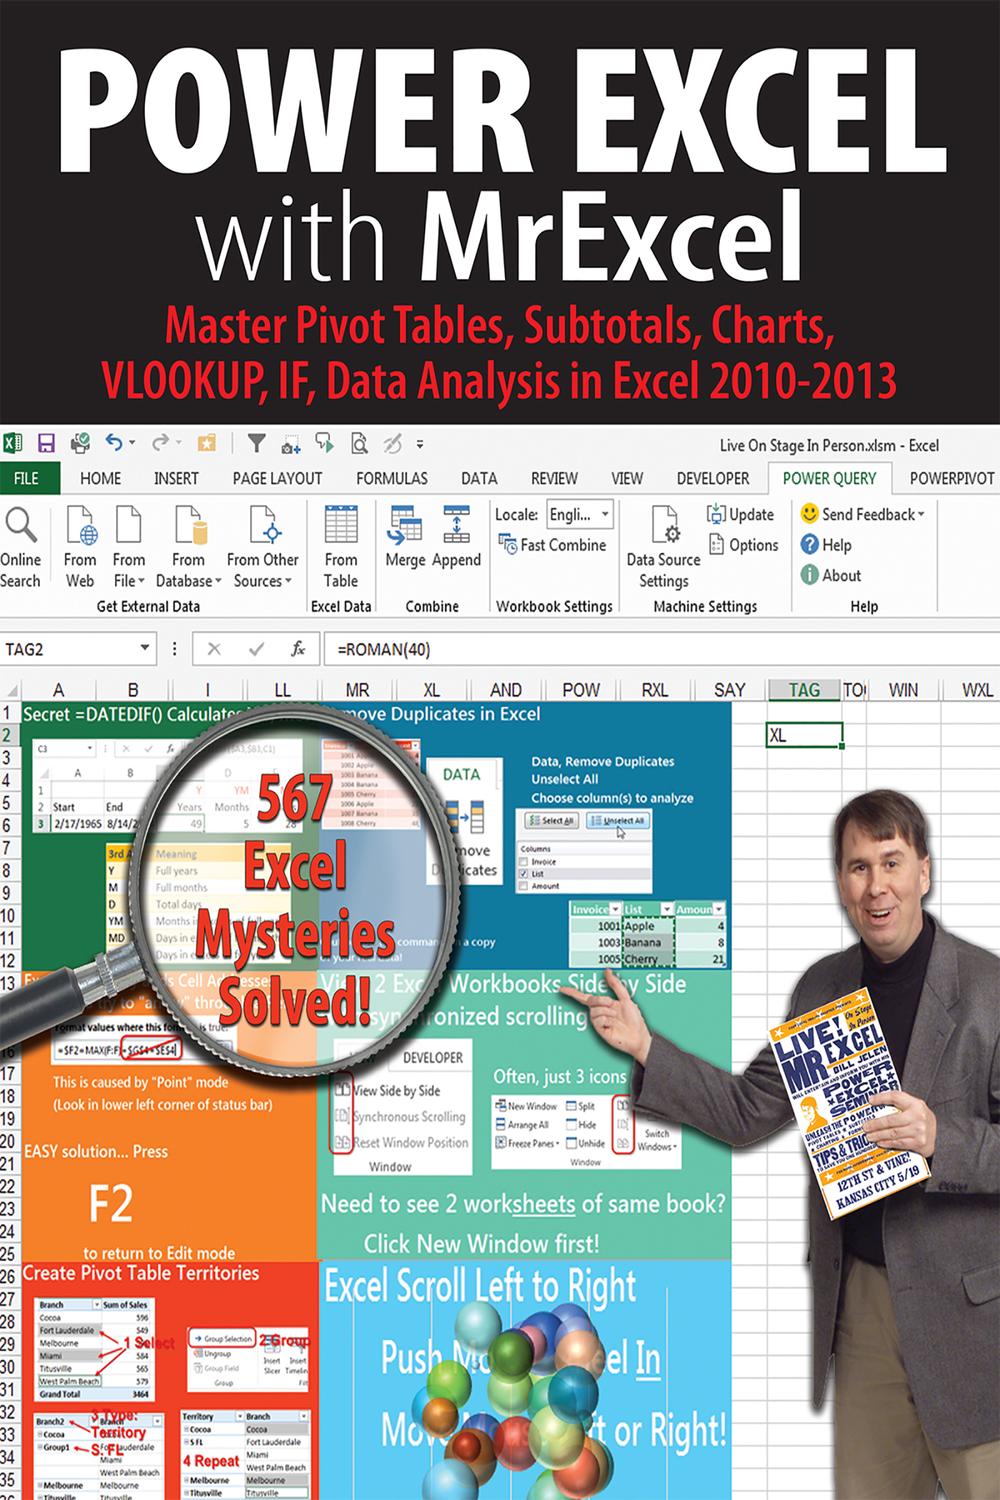 Power Excel with MrExcel - Bill Jelen